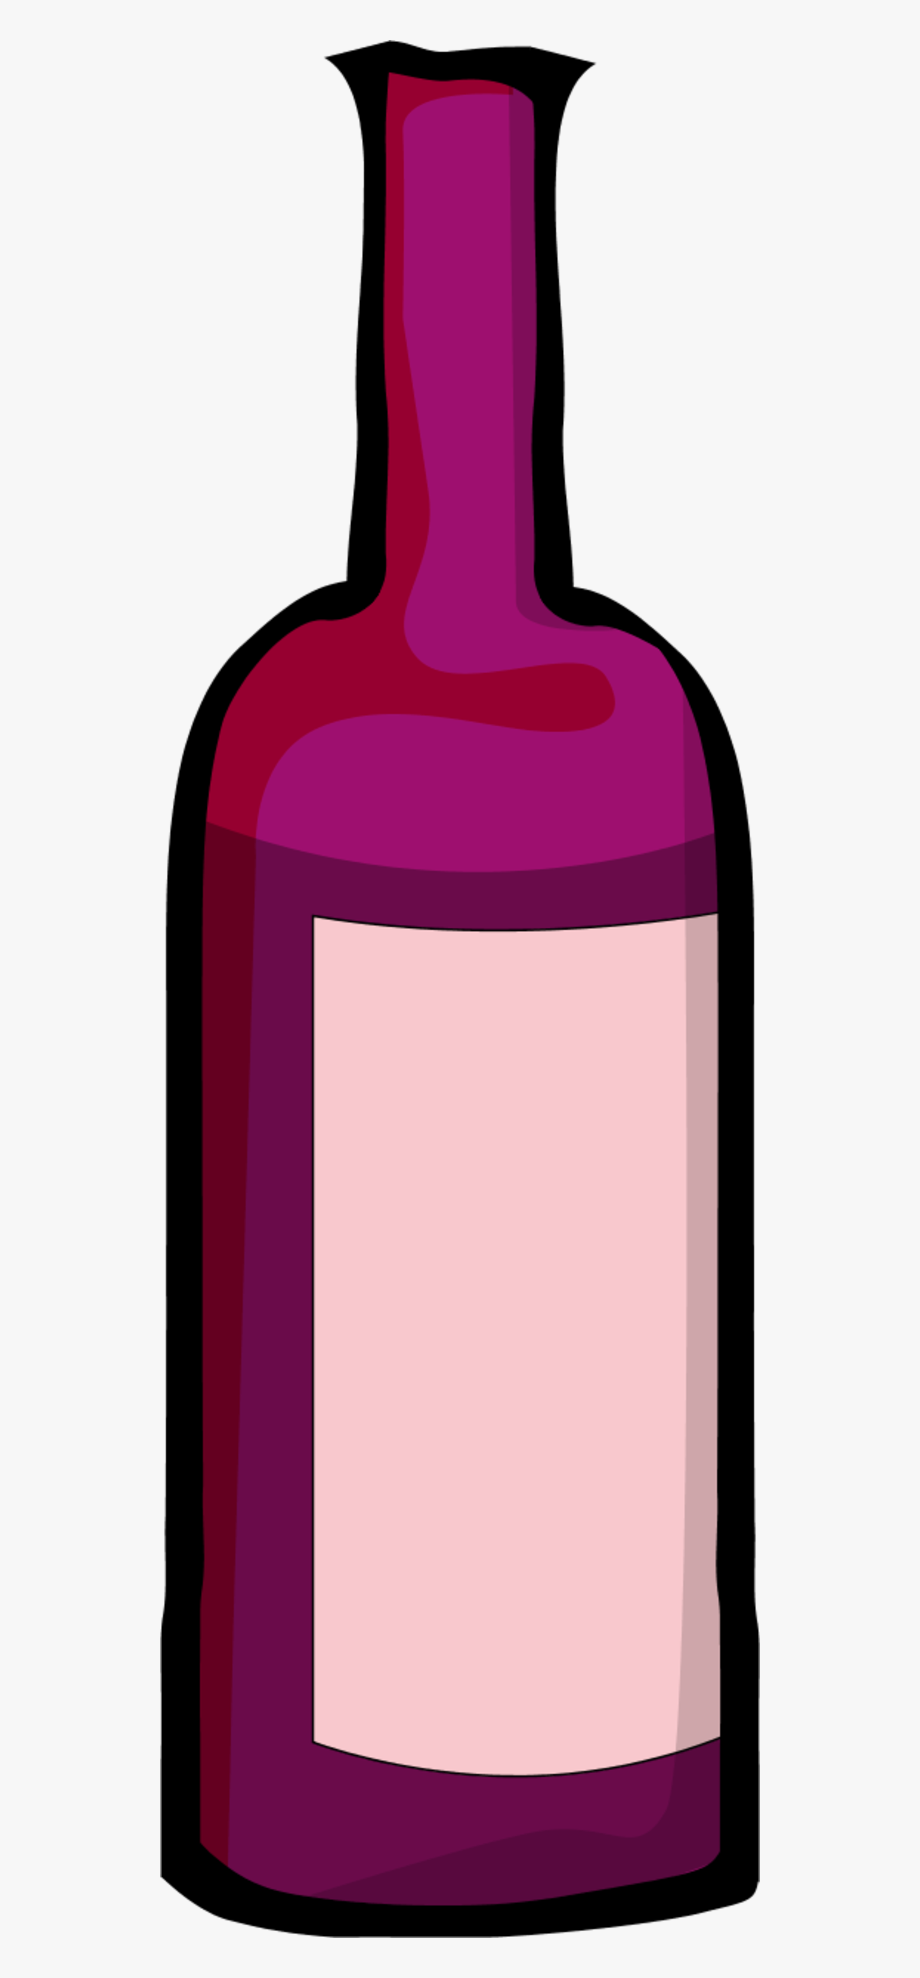 Wine bottle clipart.